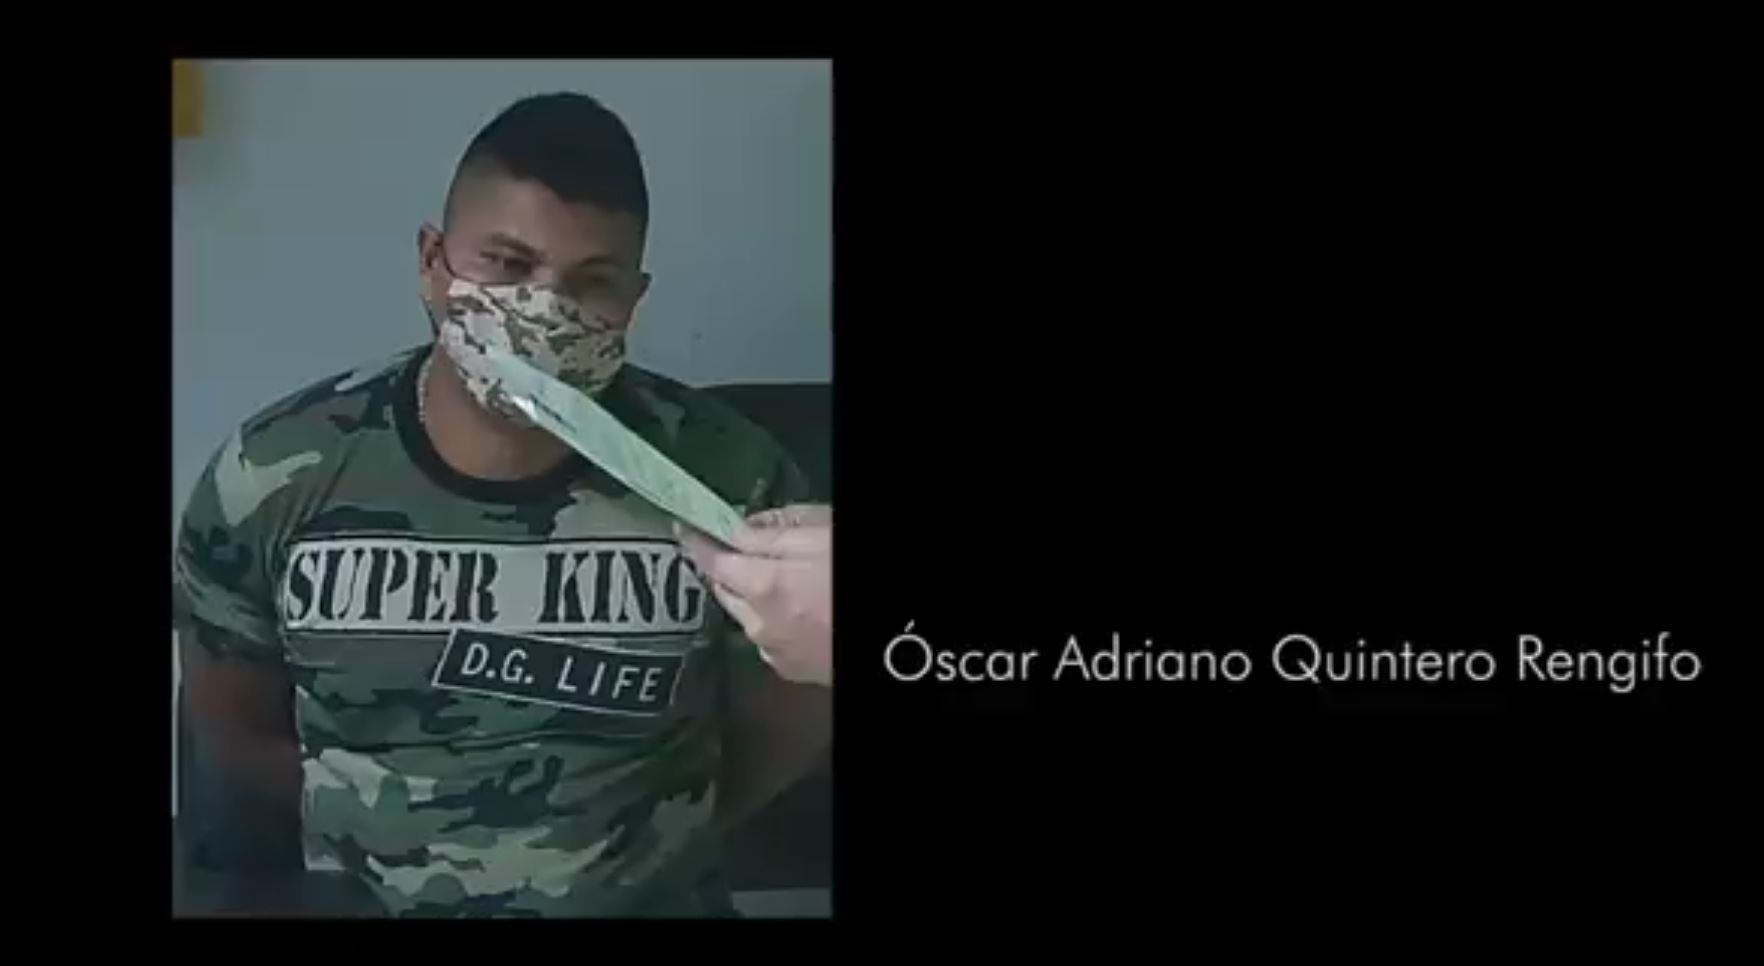 Oscar Adriano Quintero Rengifo,